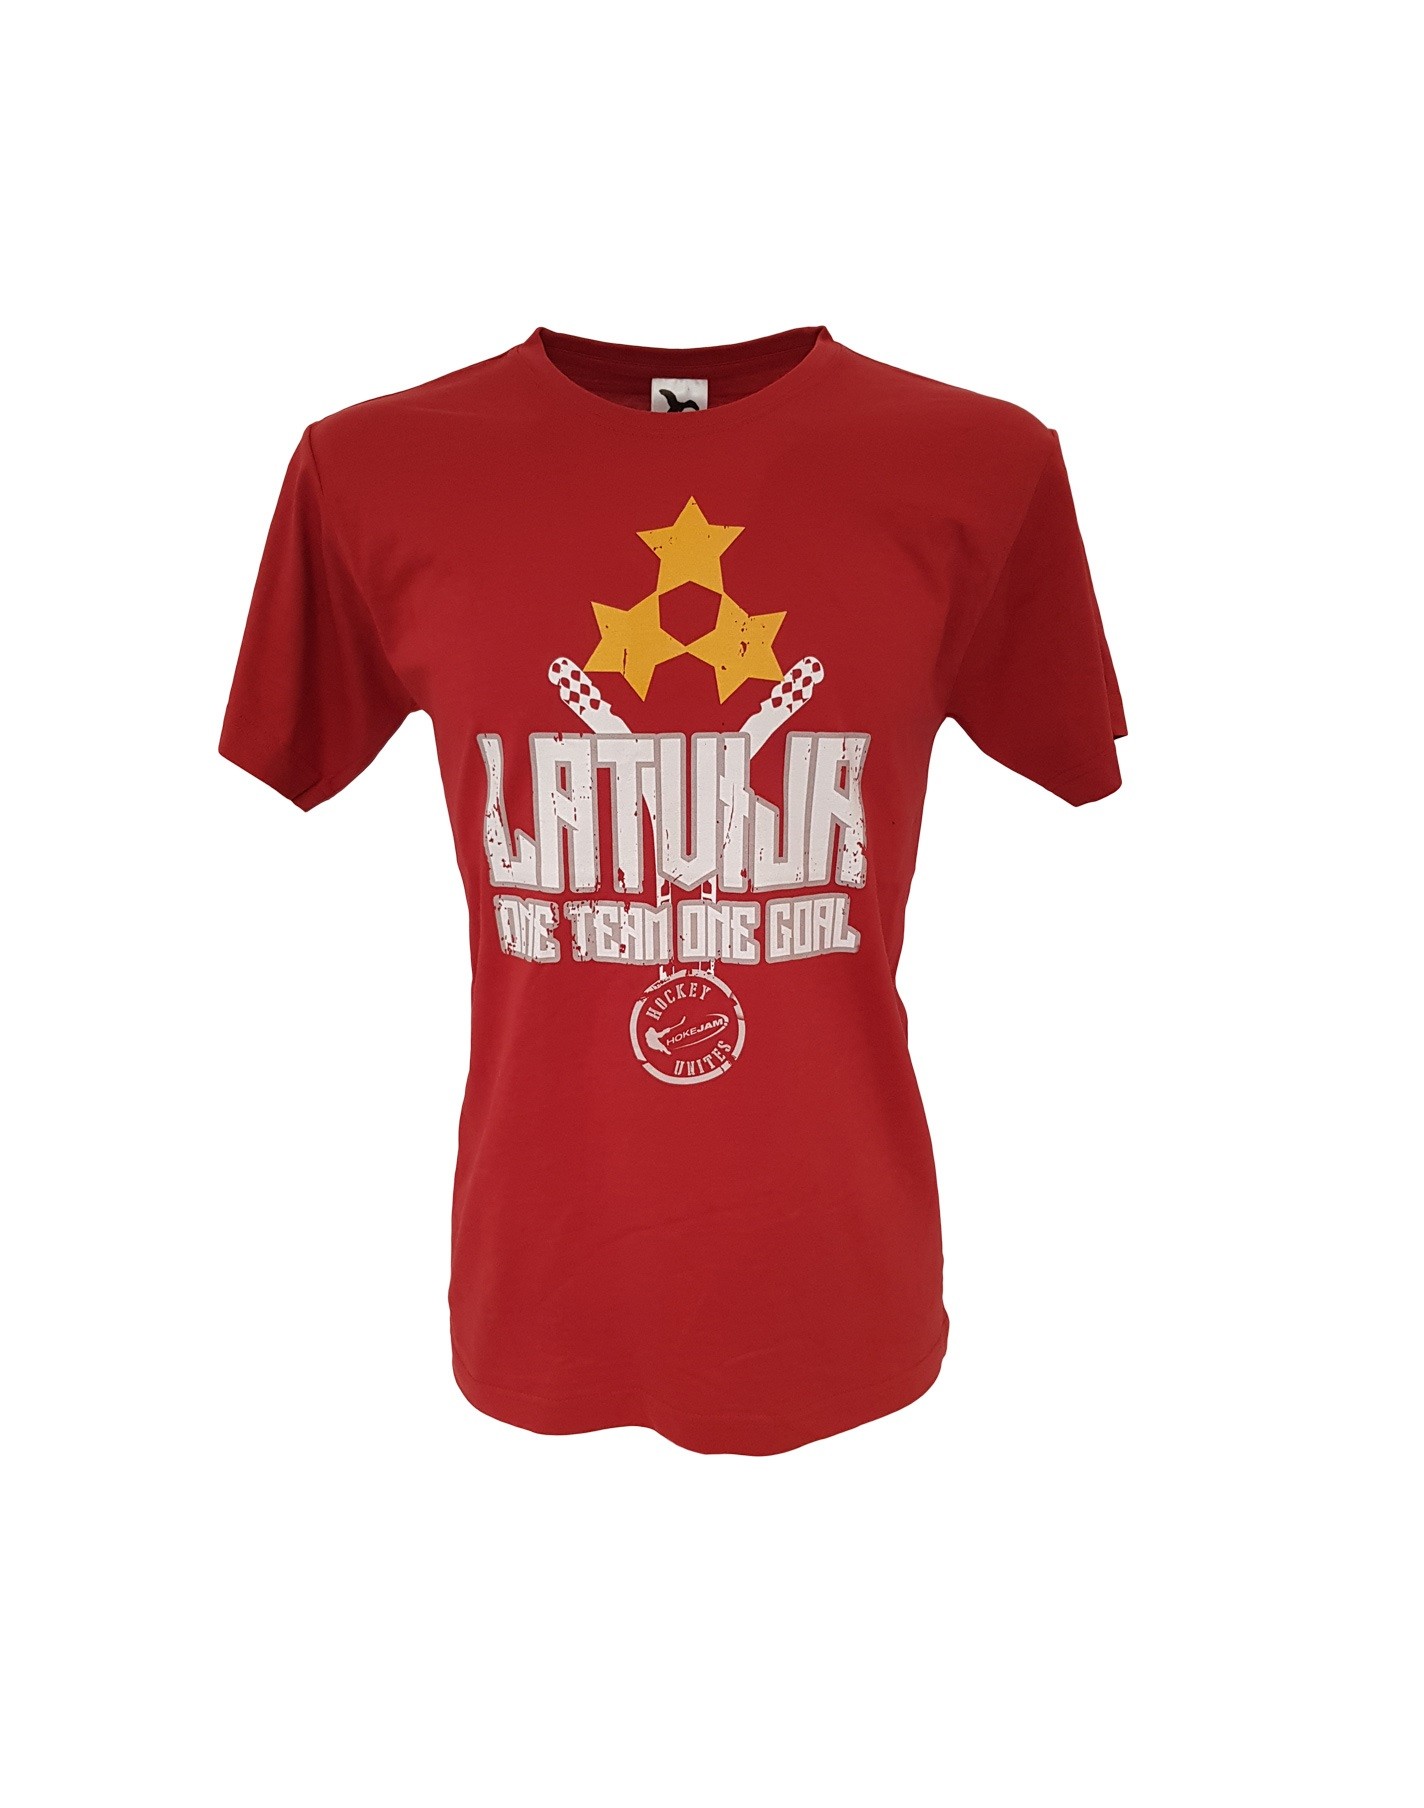 HOKEJAM.LV Latvija One Team One Goal Adult T-Shirt